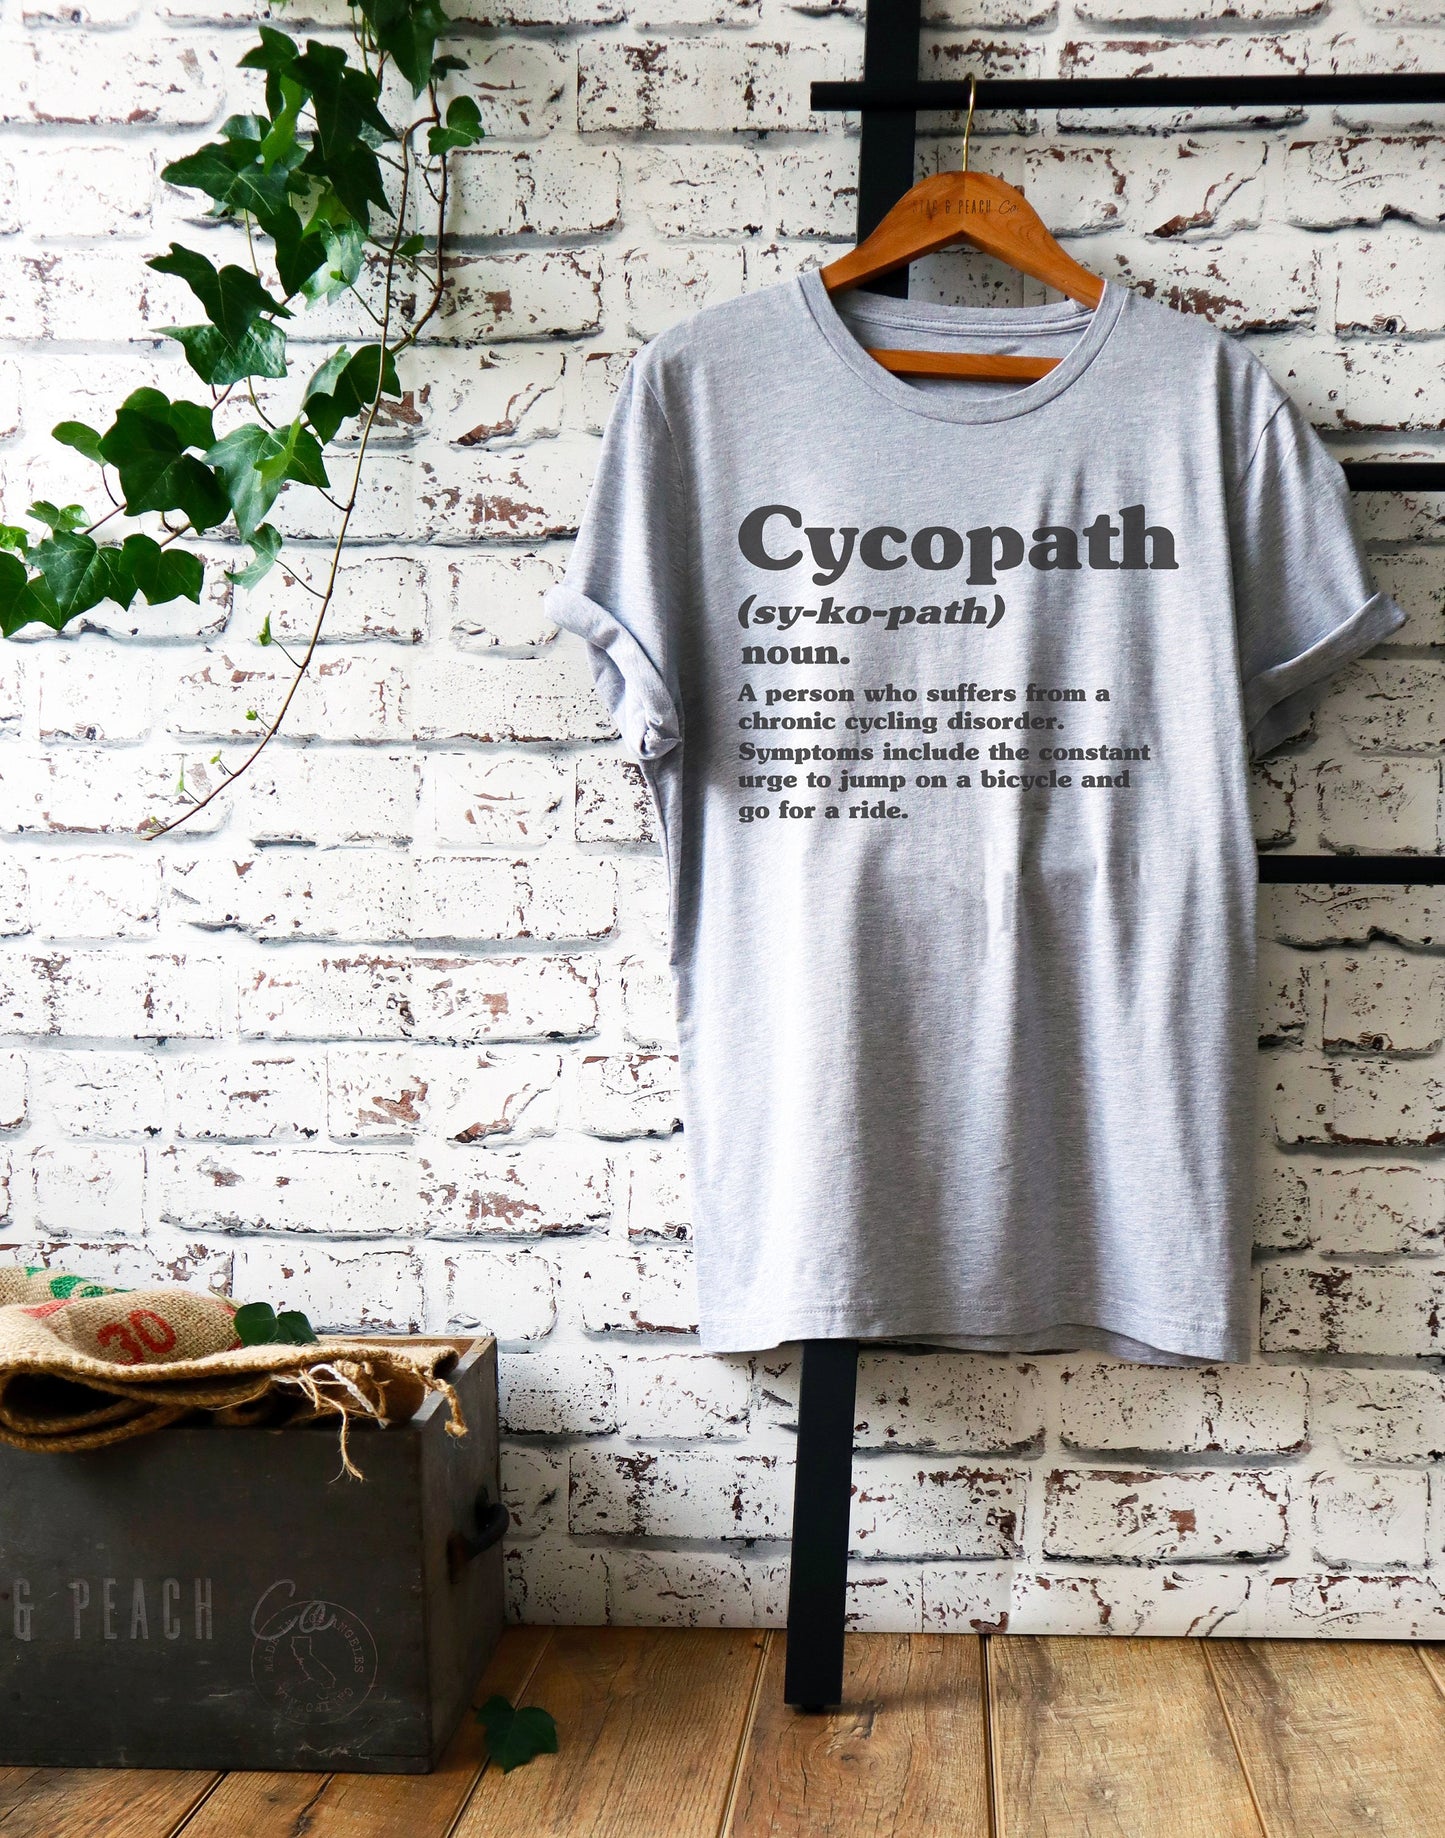 Cycopath Definition Unisex Shirt - Cycling shirt, Cyclists gift, Bicycle shirt, Mens cyclist gift, Bicycle tshirt women, bicycle lover gift